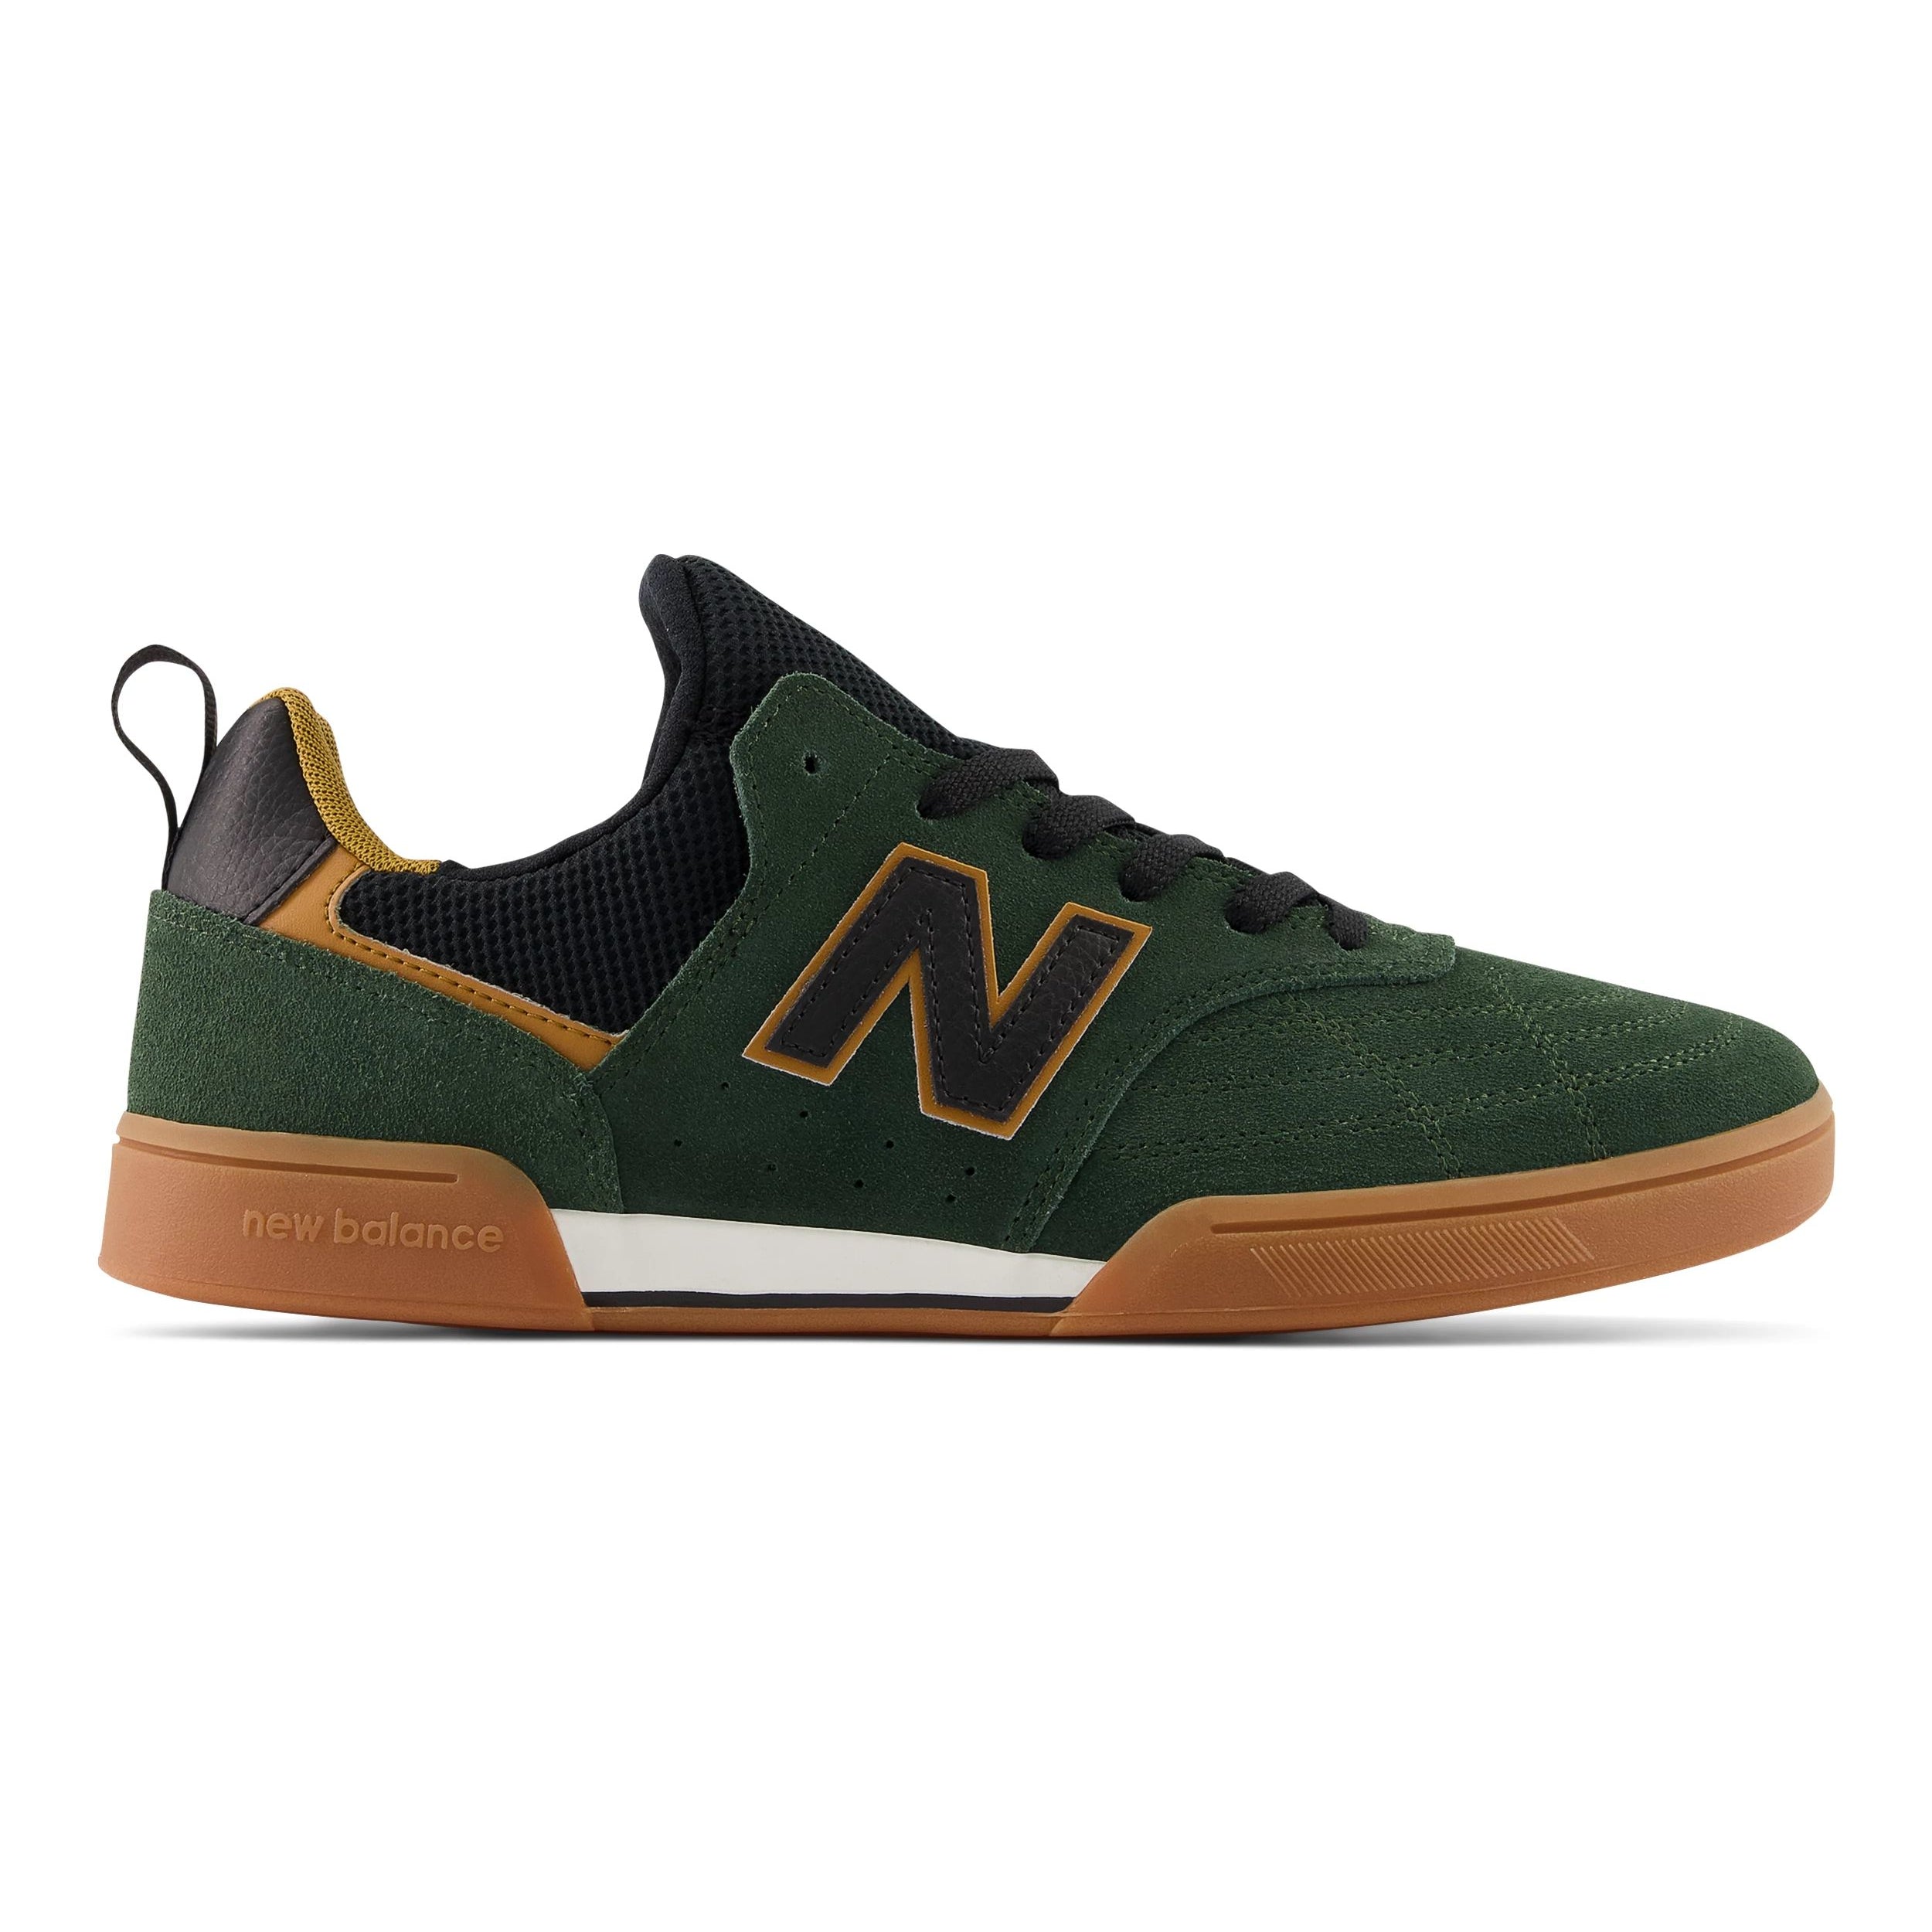 Forest Green/Gum NM288 Sport NB Numeric Skate Shoe